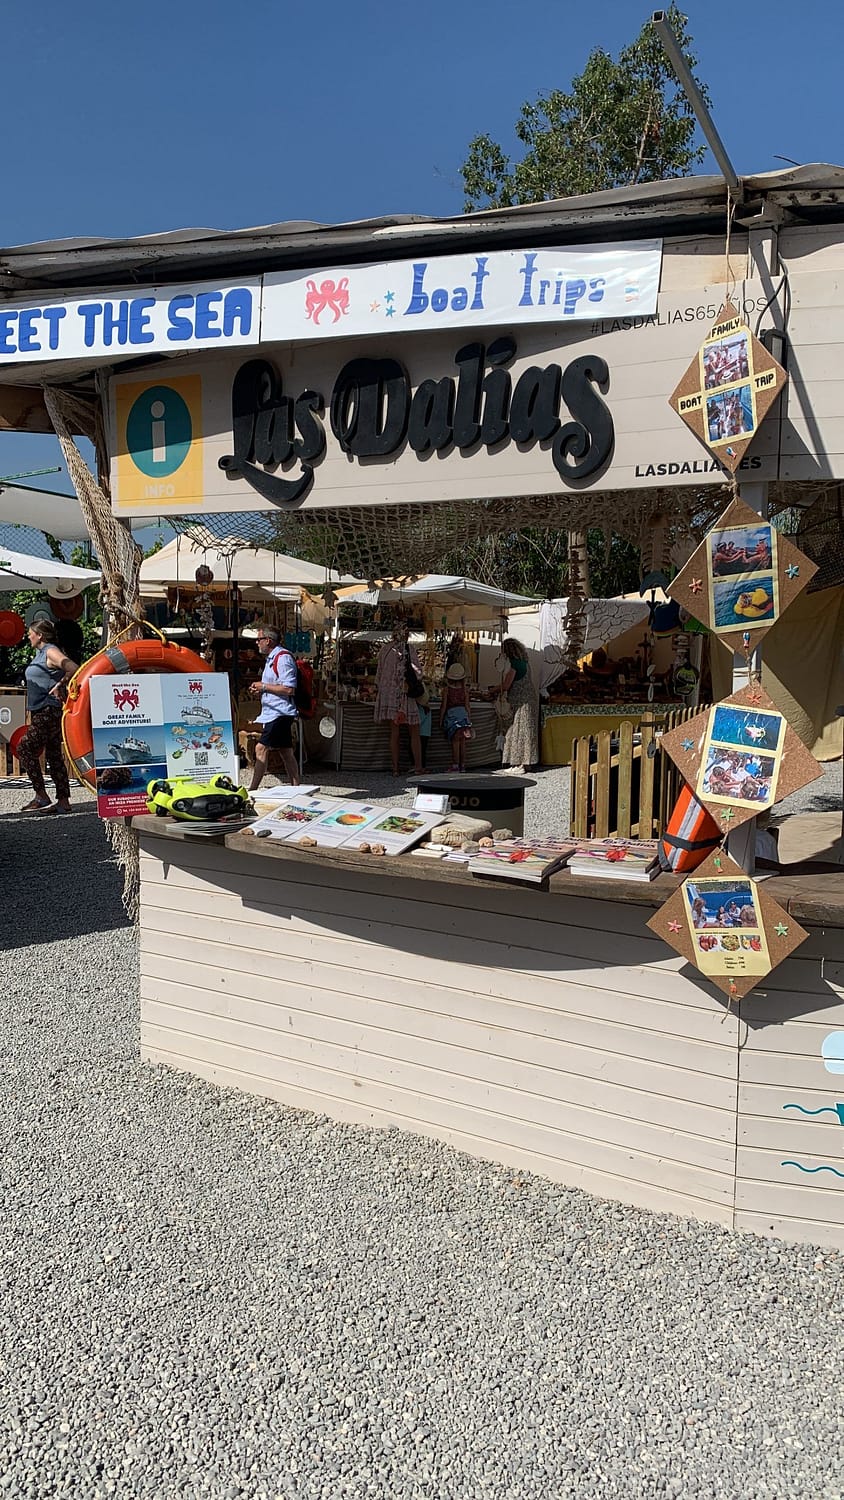 Meet the Sea stand at Las dalias hippy market